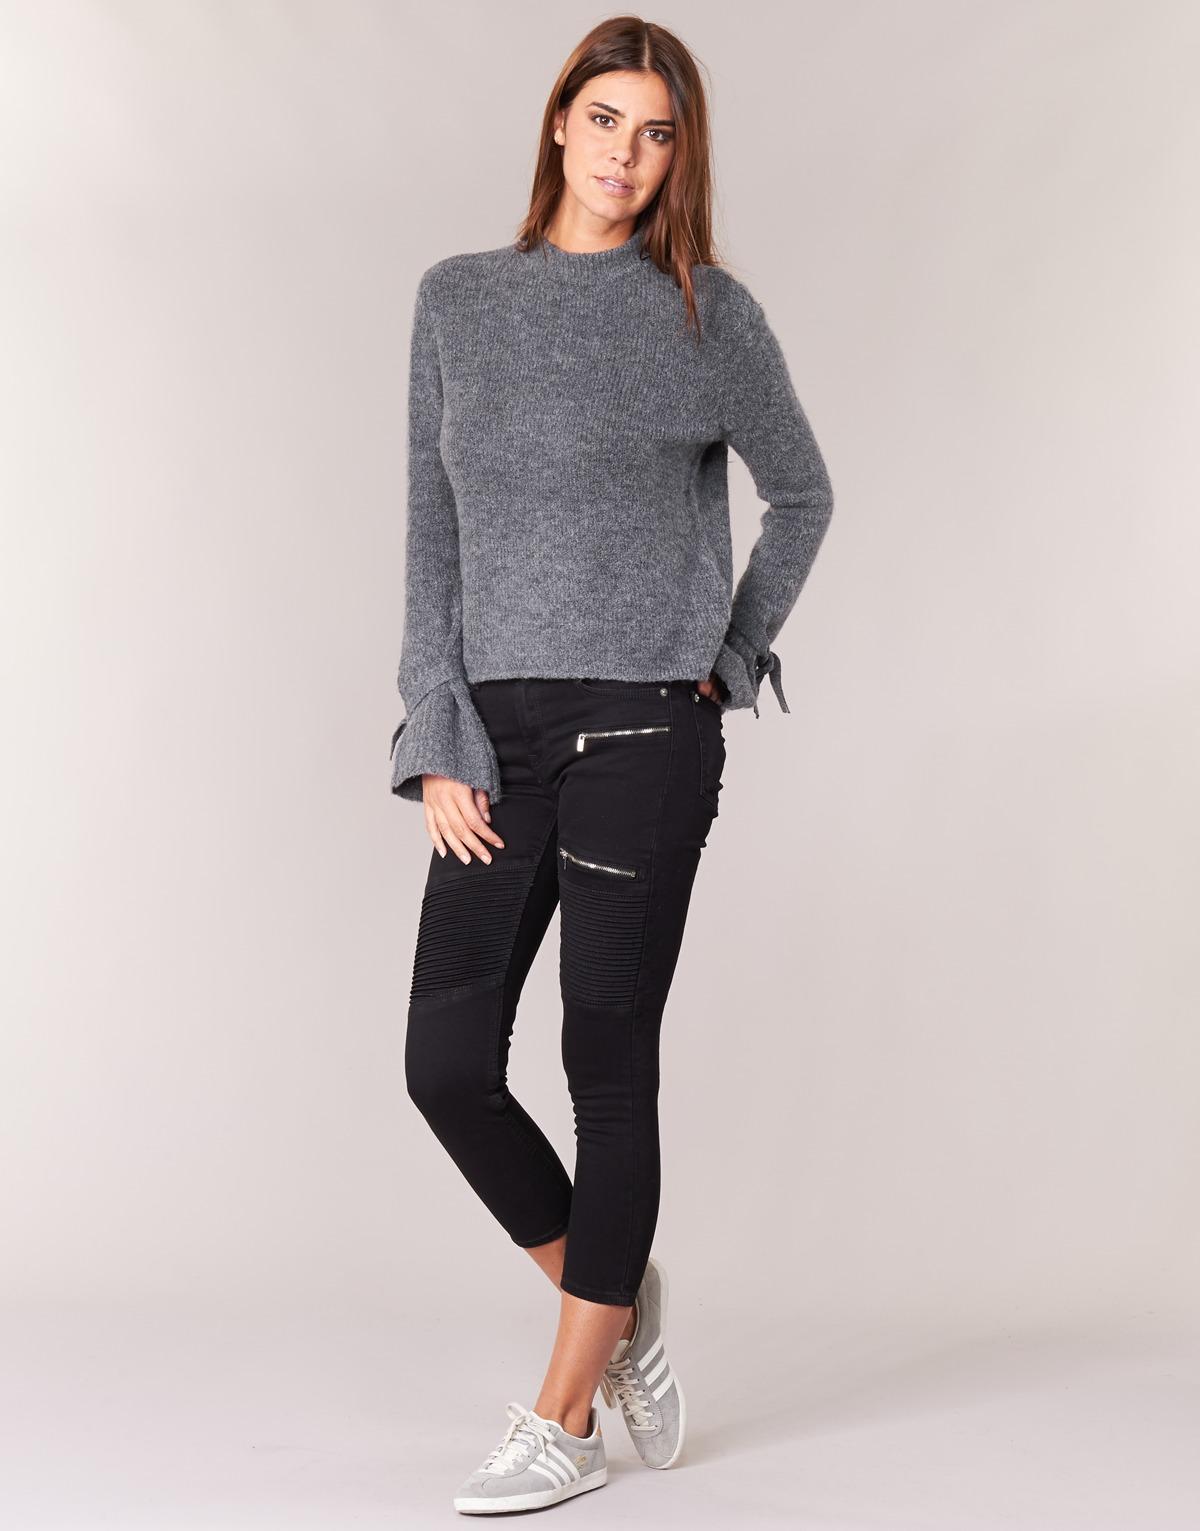 Vero Moda Elina Women's Sweater In Grey in Grey - Lyst